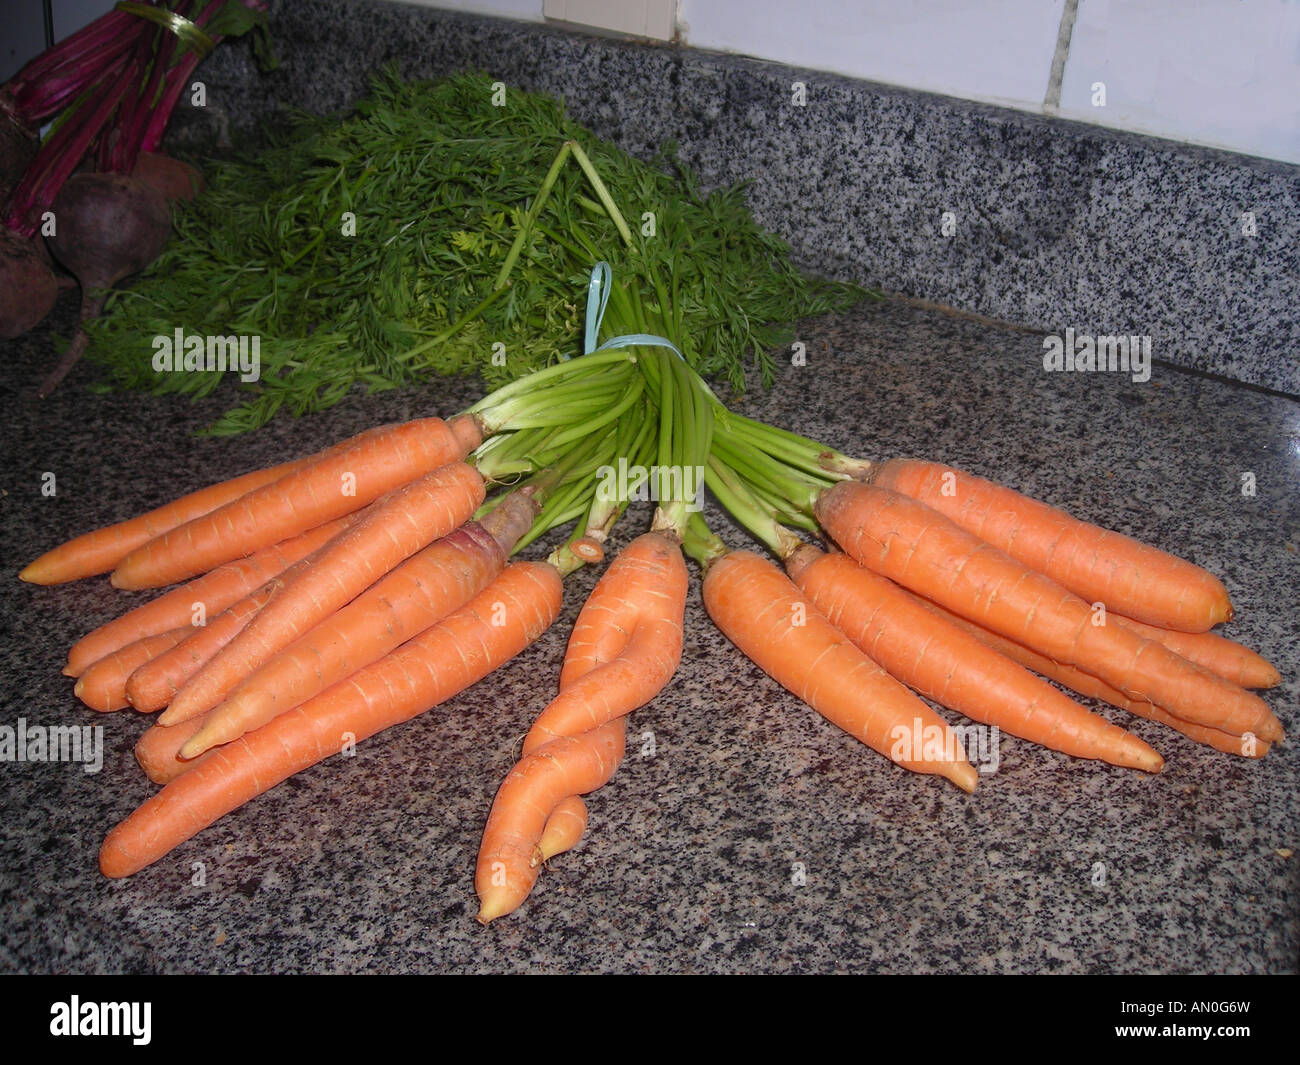 https://c8.alamy.com/comp/AN0G6W/brasilia-original-different-foud-carrot-leg-crossed-kitchen-brazil-AN0G6W.jpg